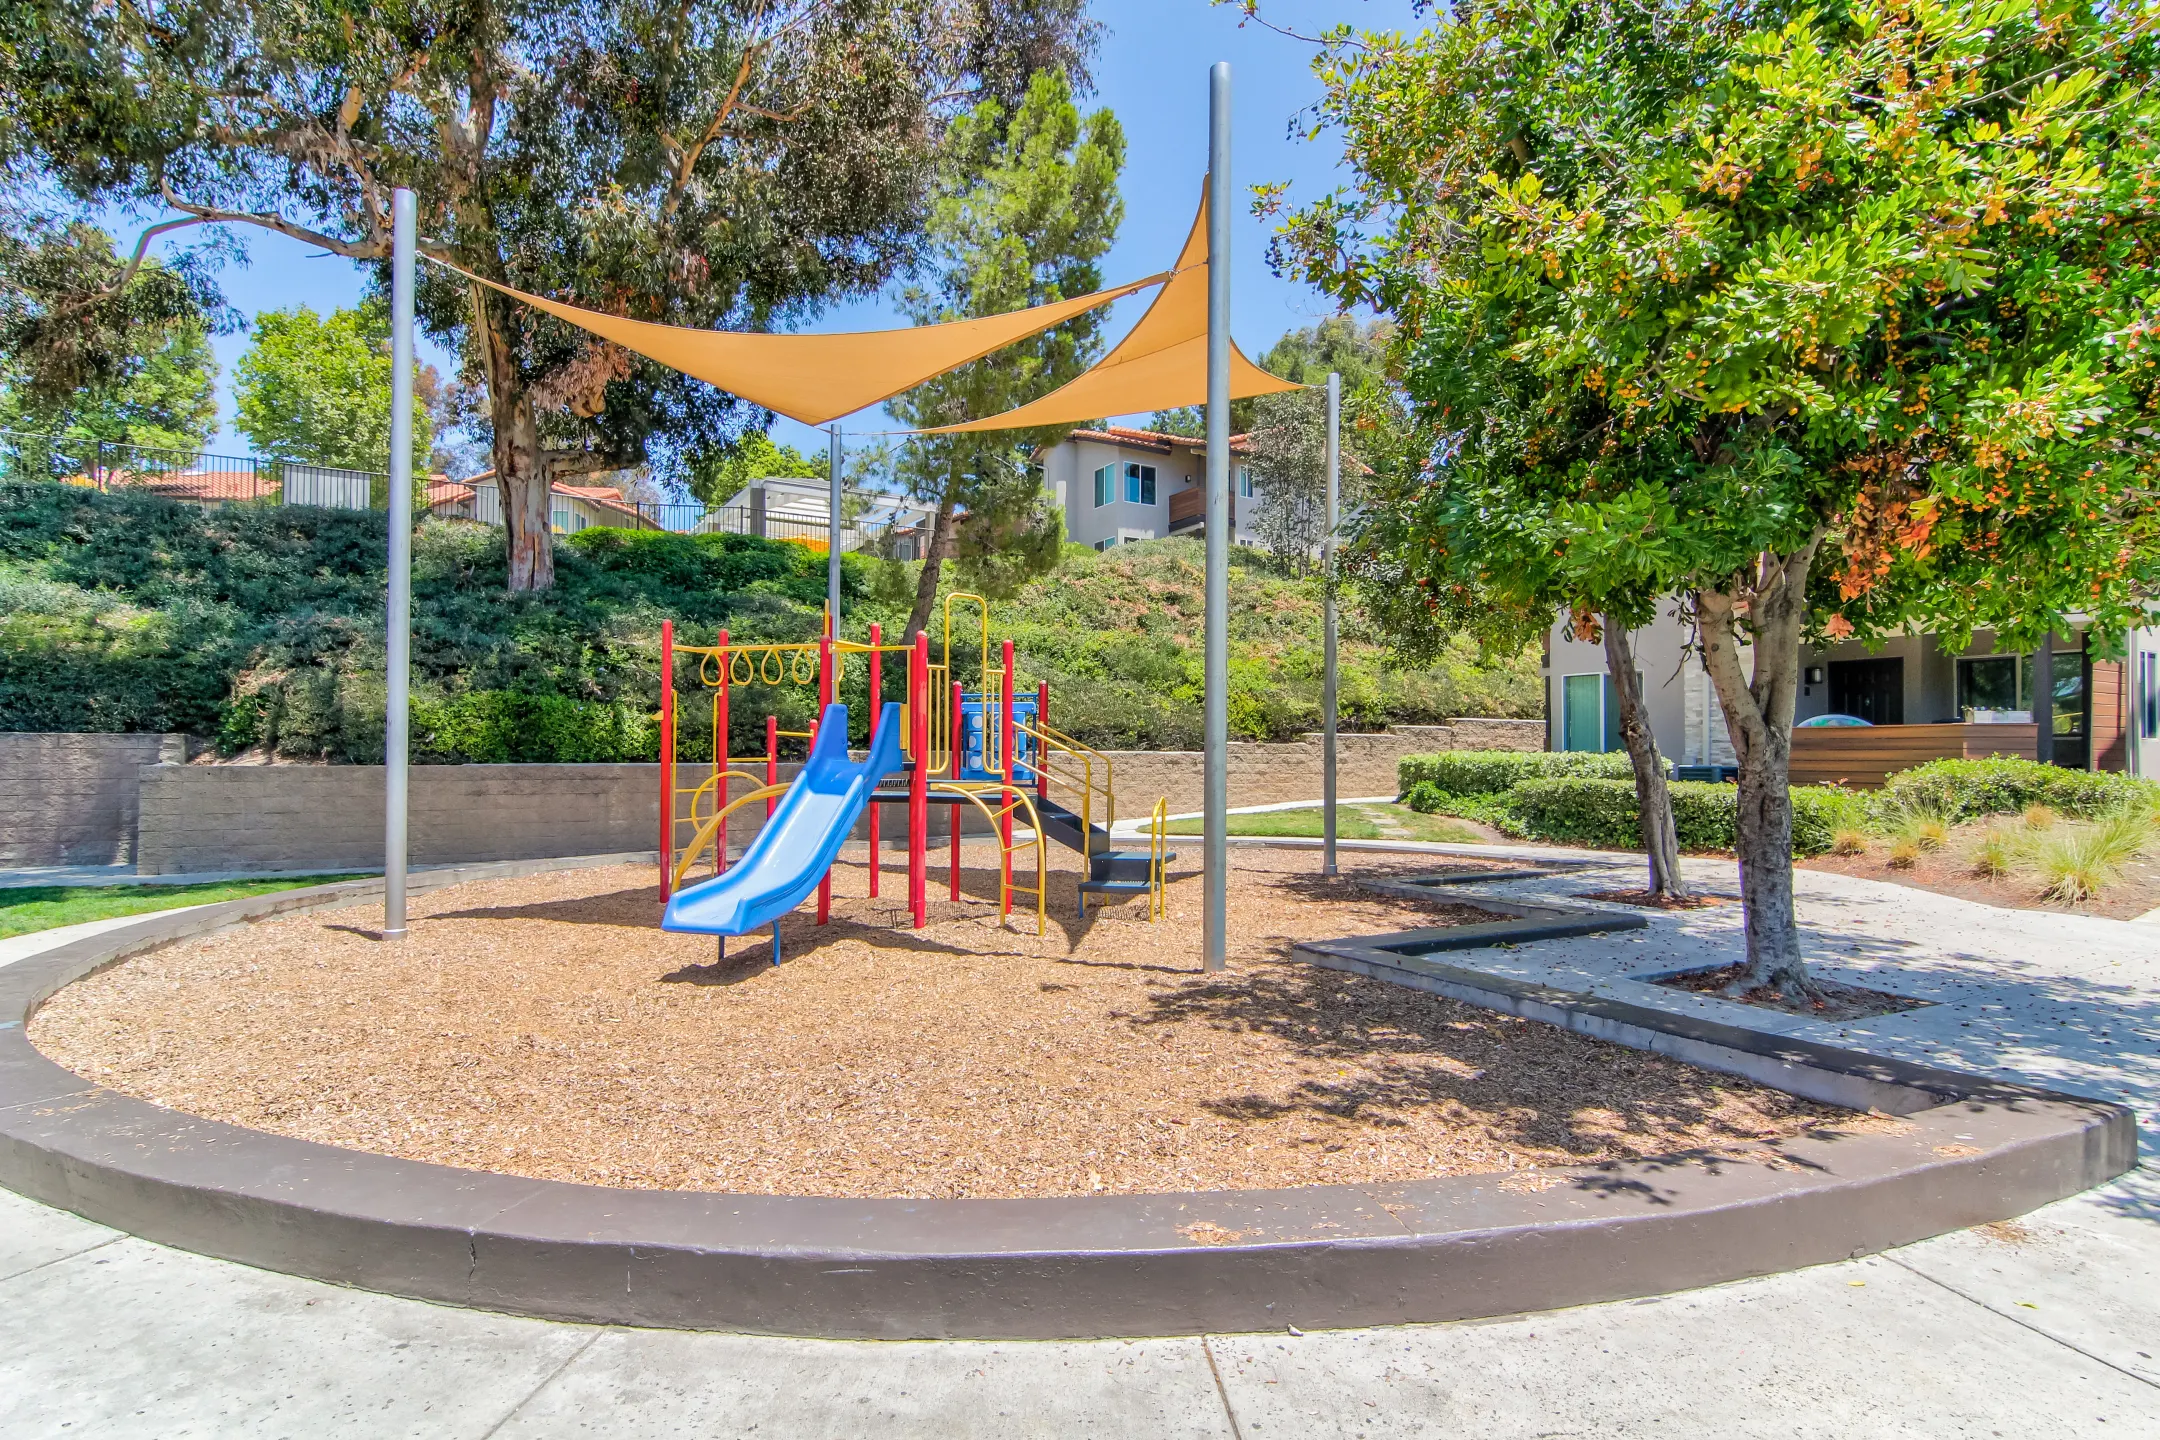 Playground - Idyllwillow - Mission Viejo, CA